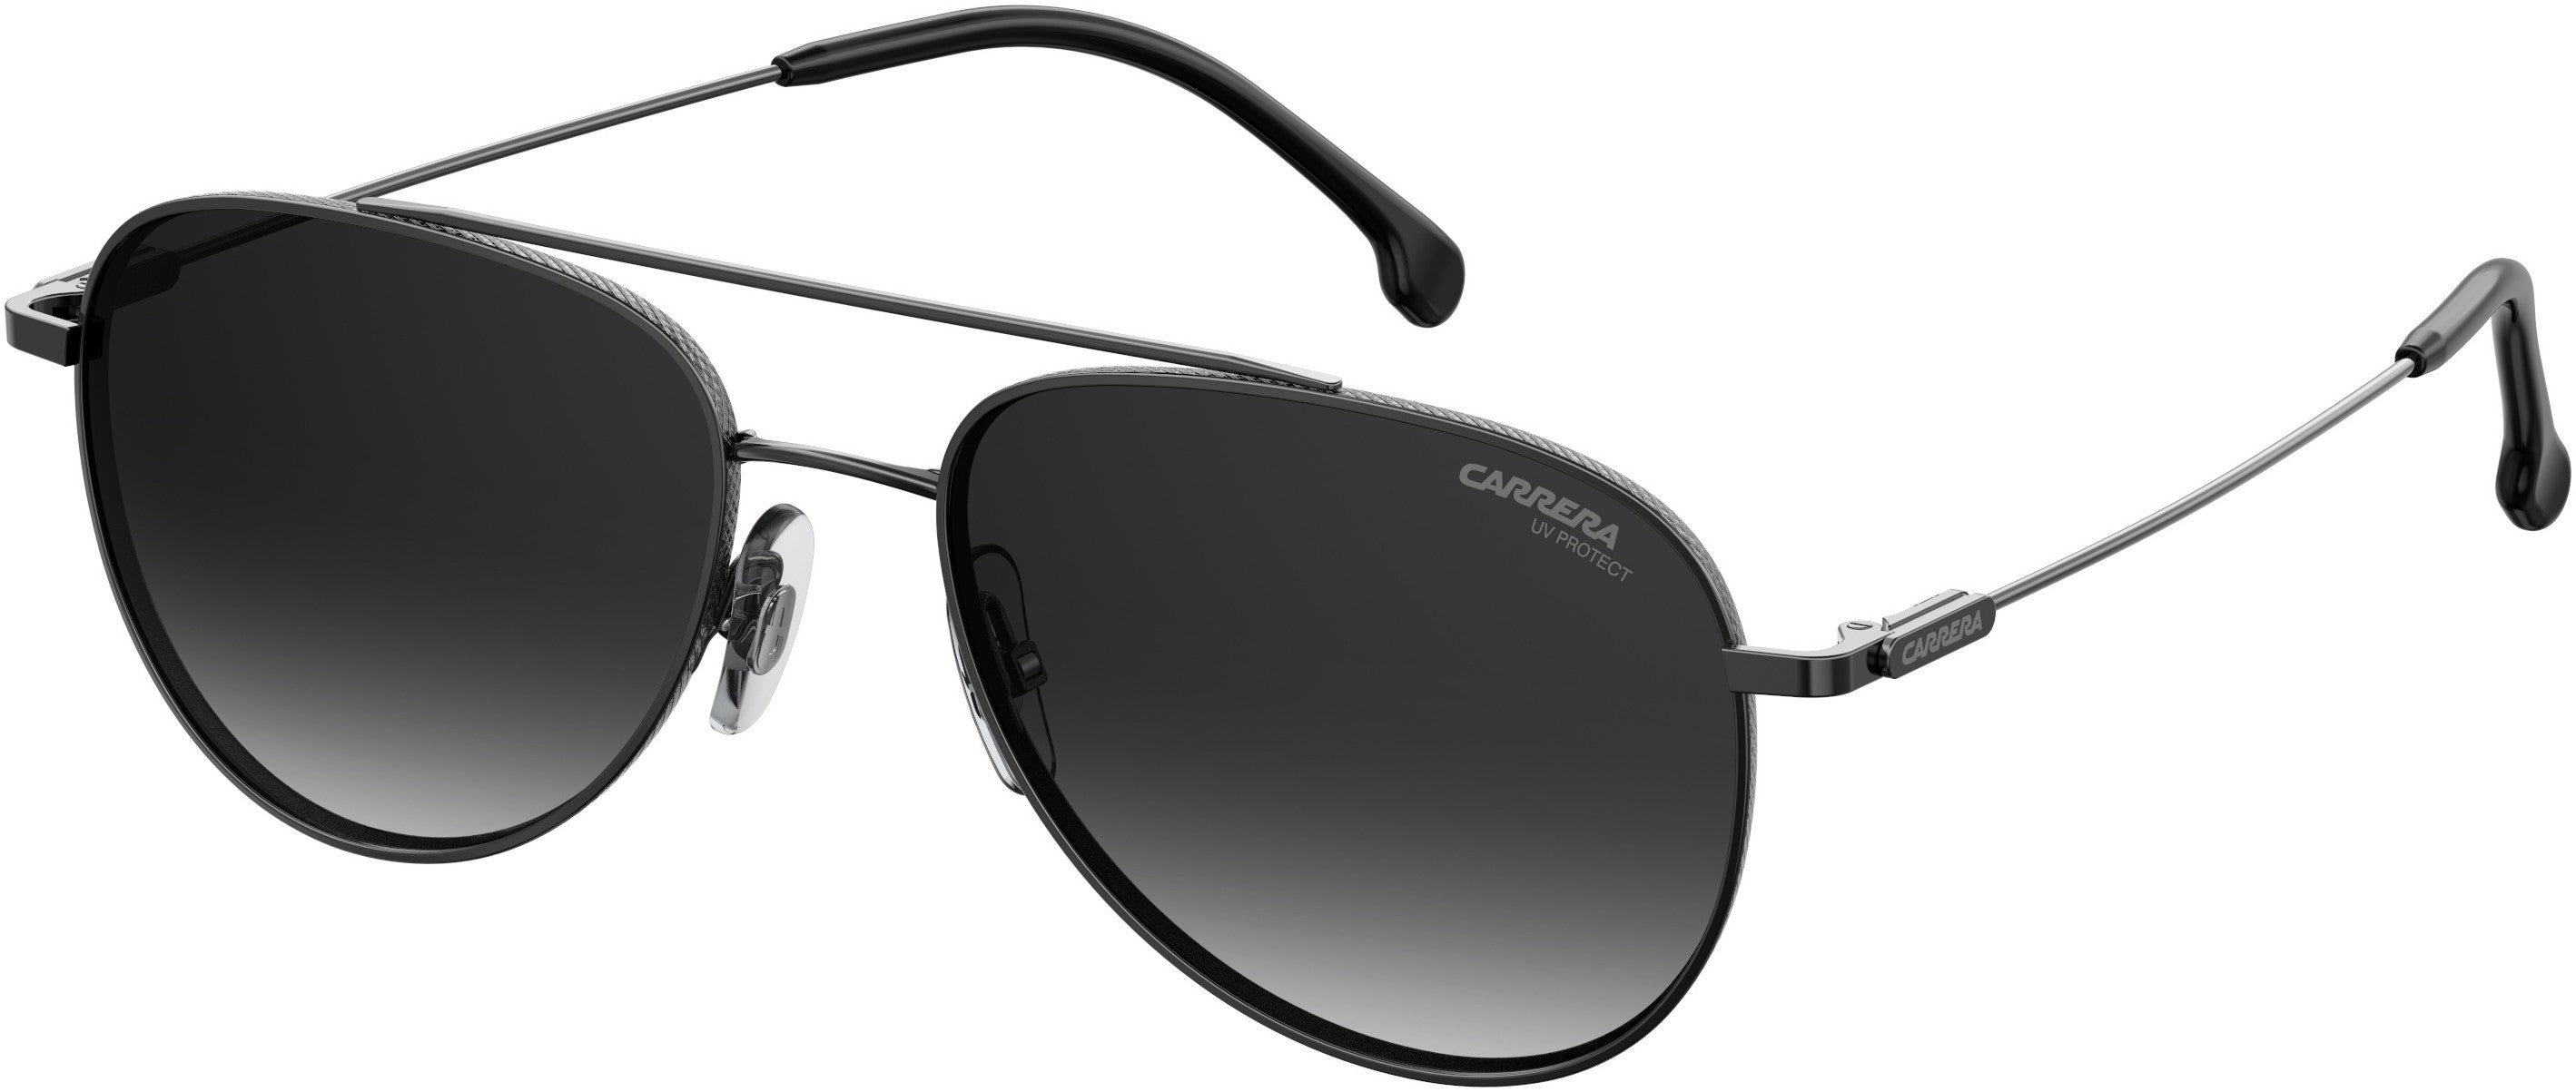  Carrera 187/S Aviator Sunglasses 0V81-0V81  Dark Ruthenium Black (9O Dark Gray Gradient)